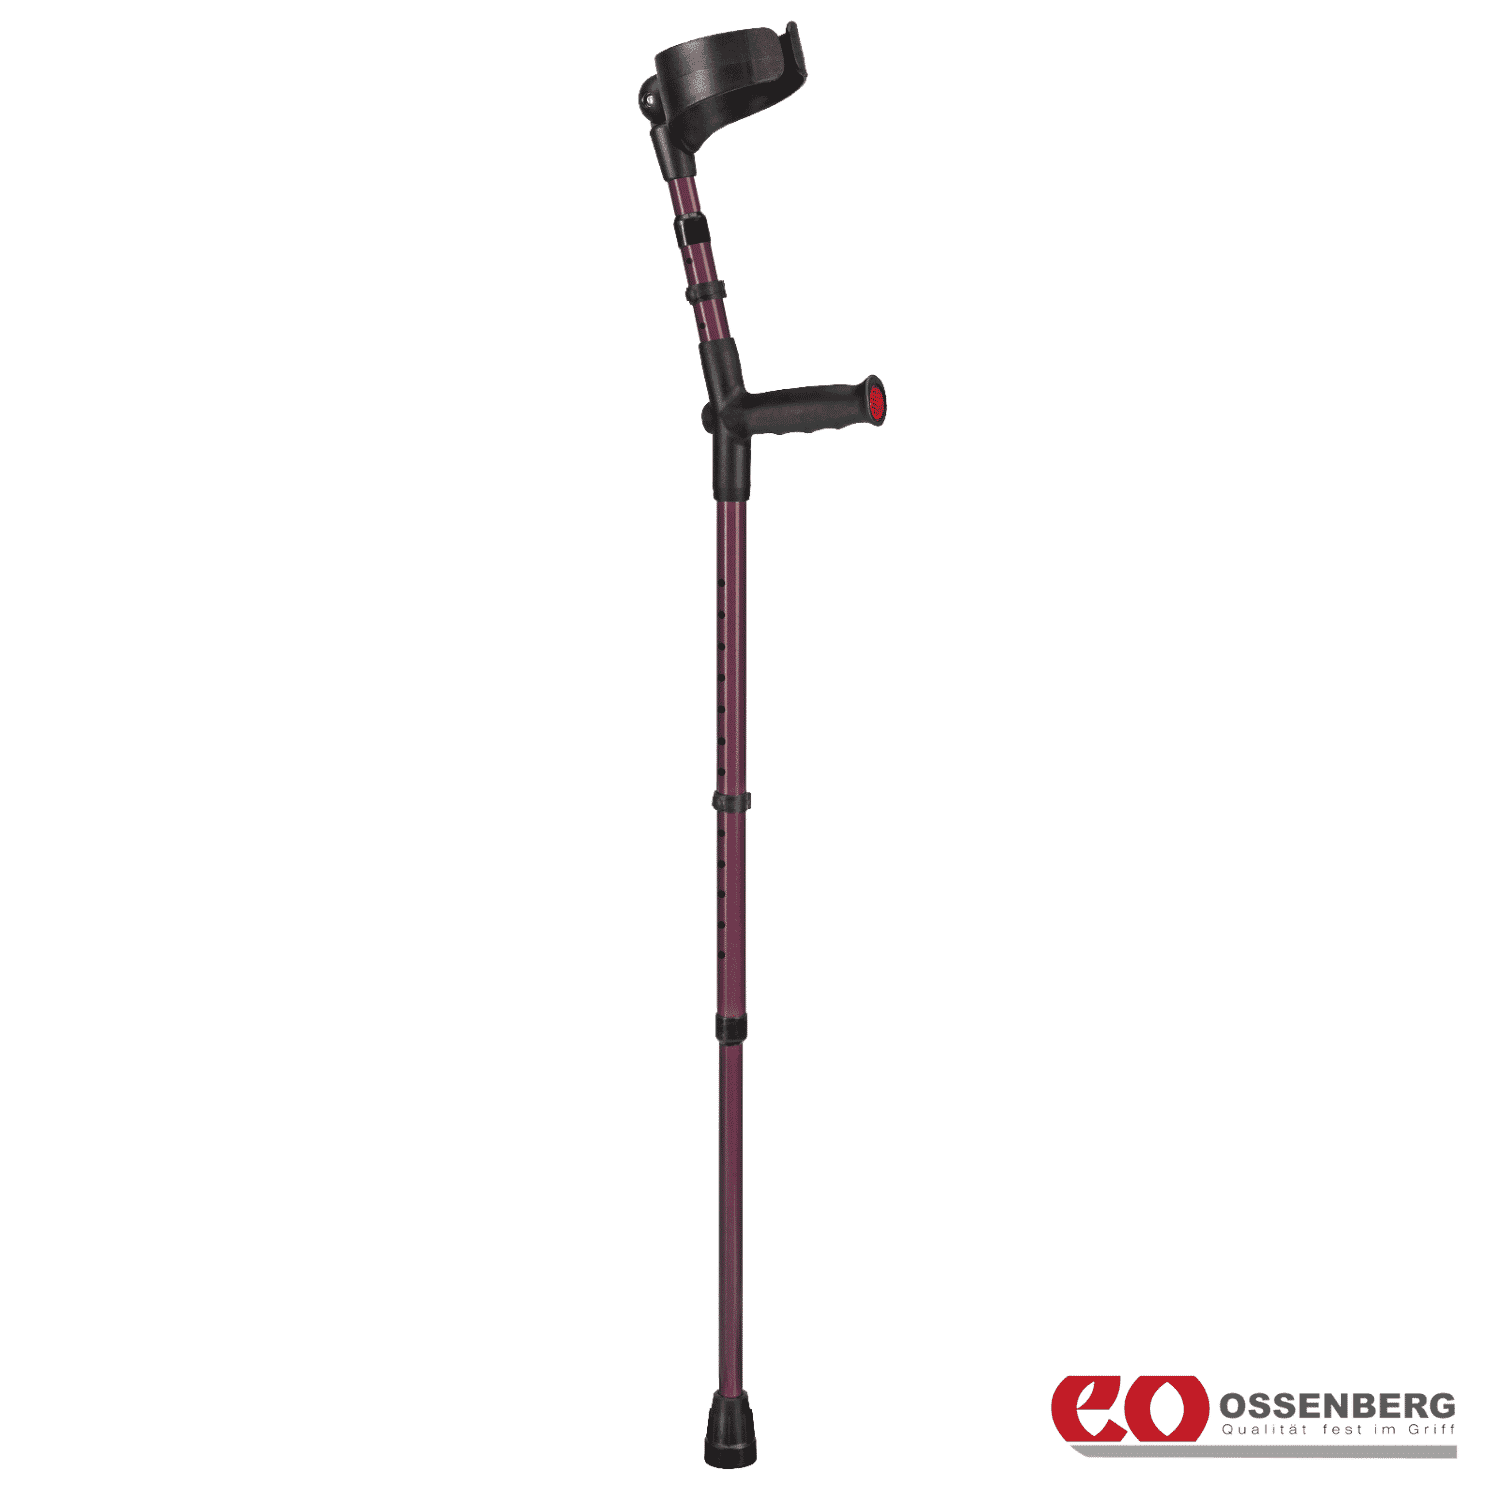 View Ossenberg Soft Grip Double Adjustable Crutches Blackberry Single information